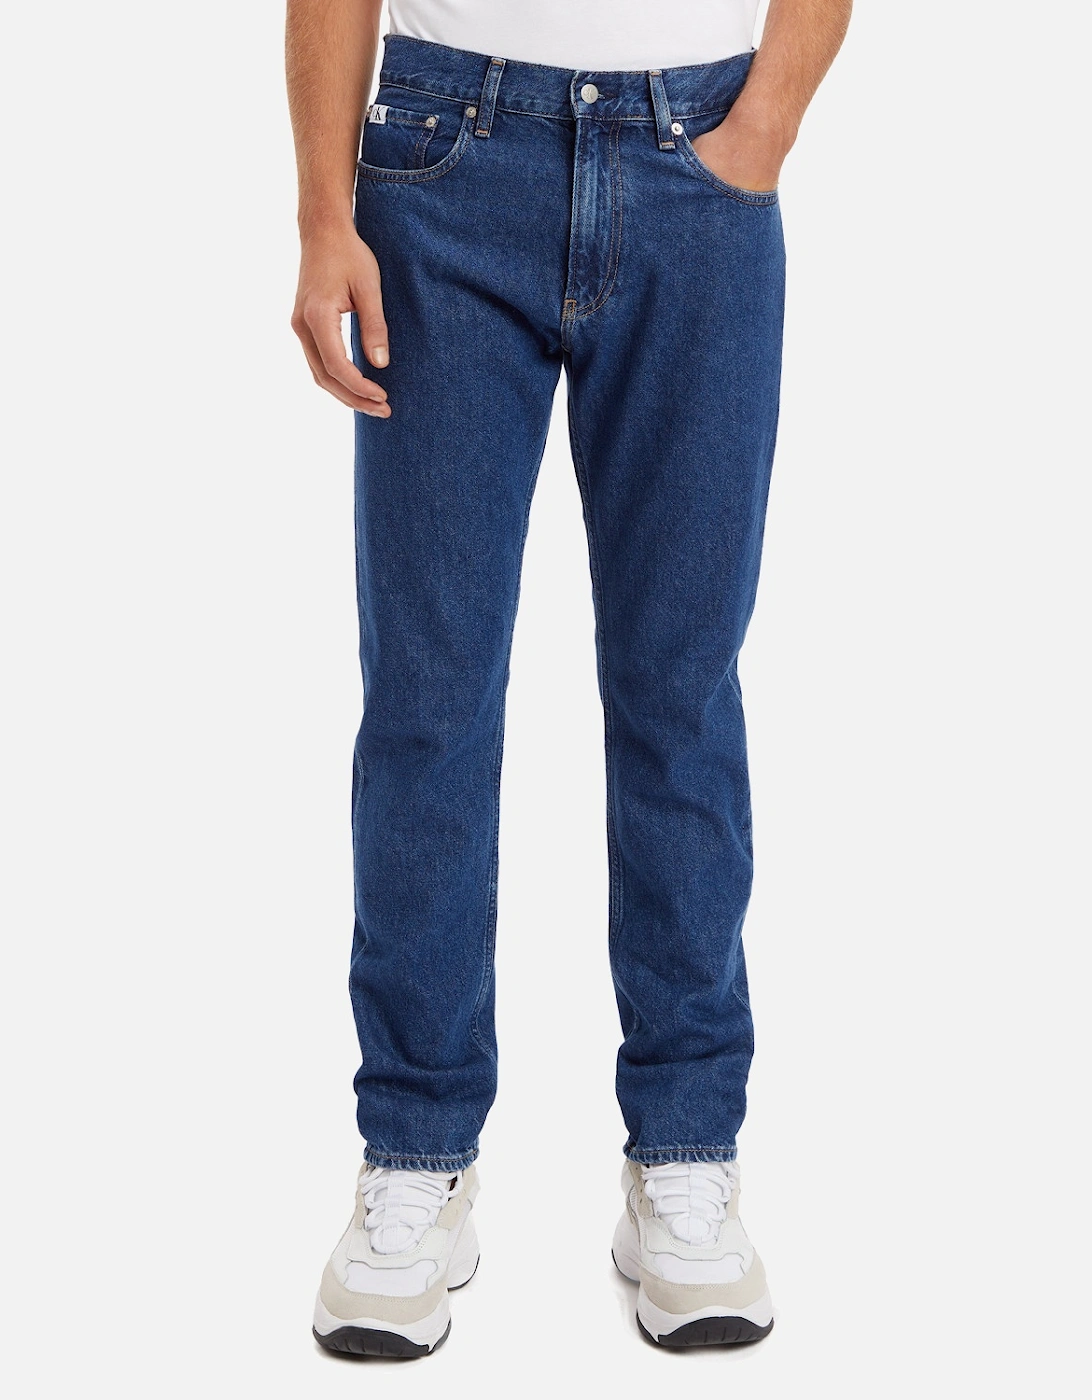 Mens Authentic Straight Leg Jeans (Blue)